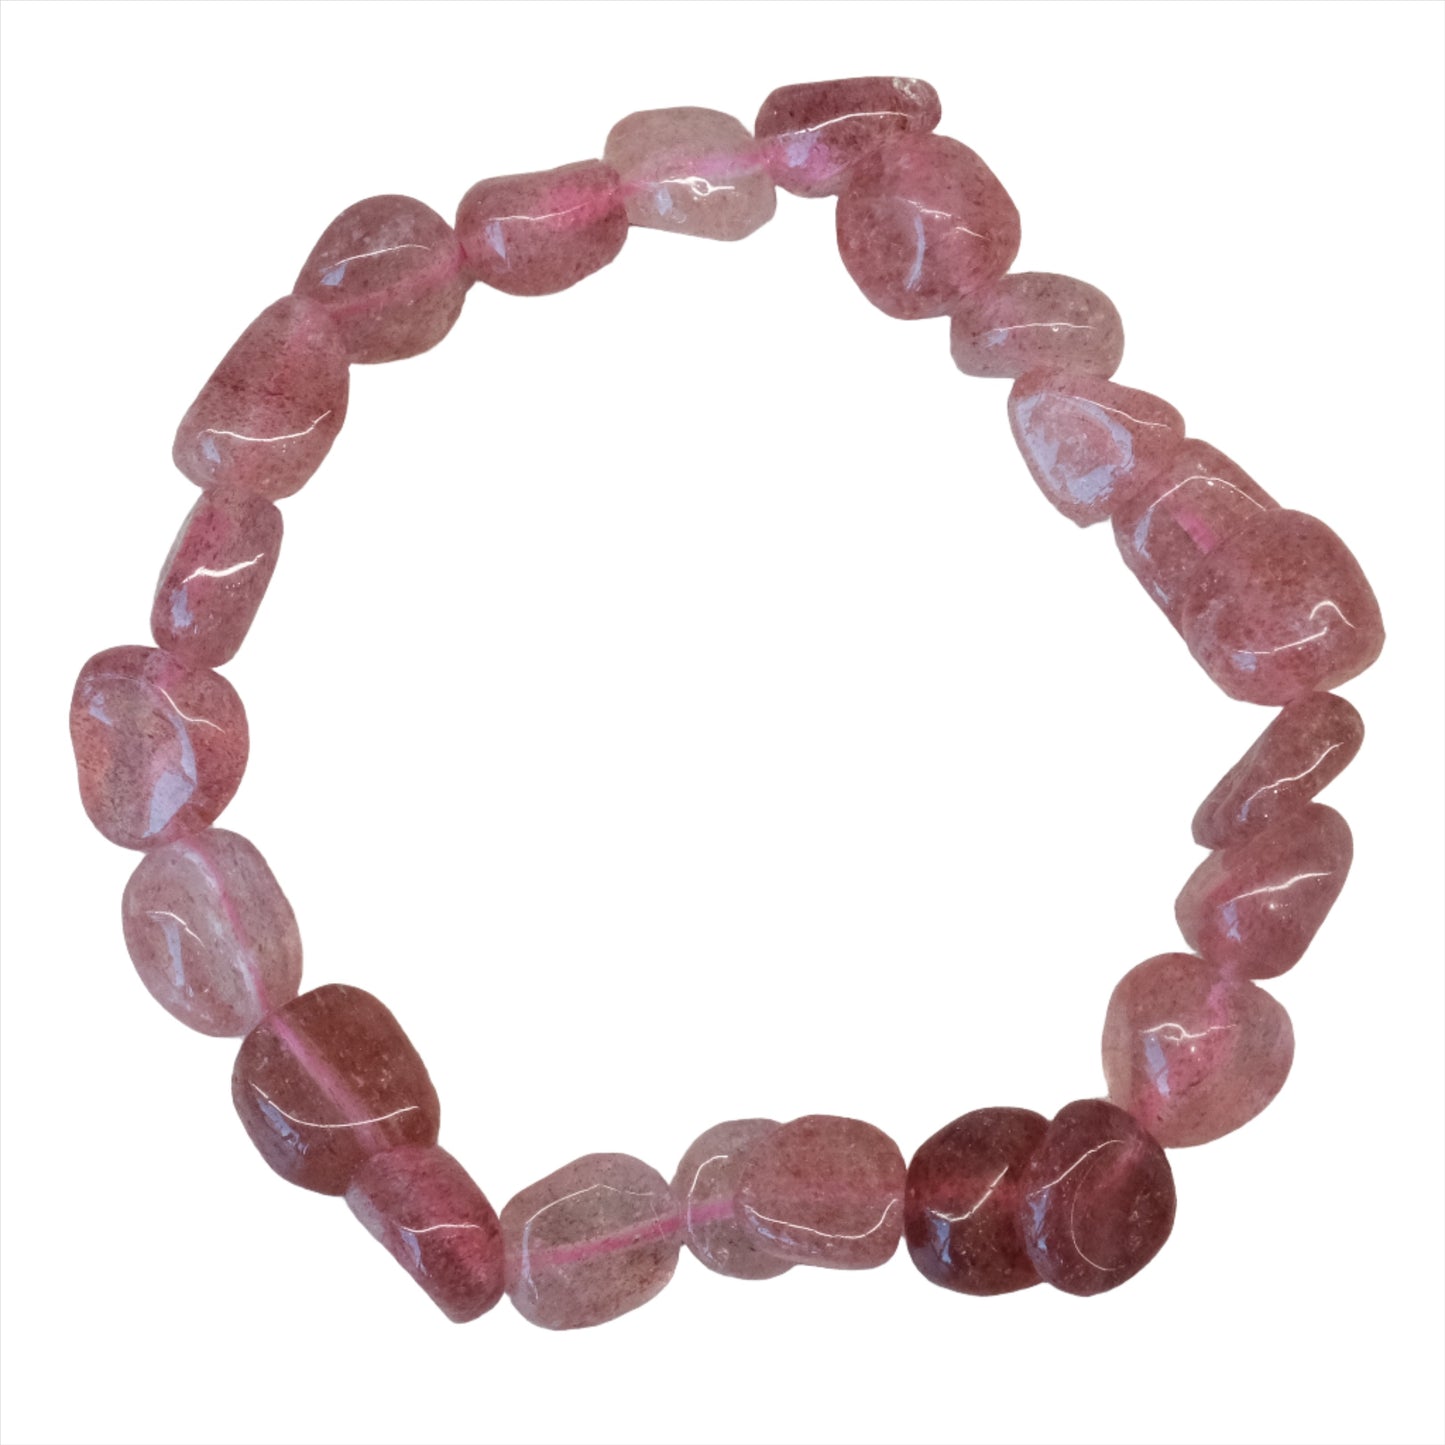 Strawberry Quartz Tumbled Stone Bracelet 6-8MM